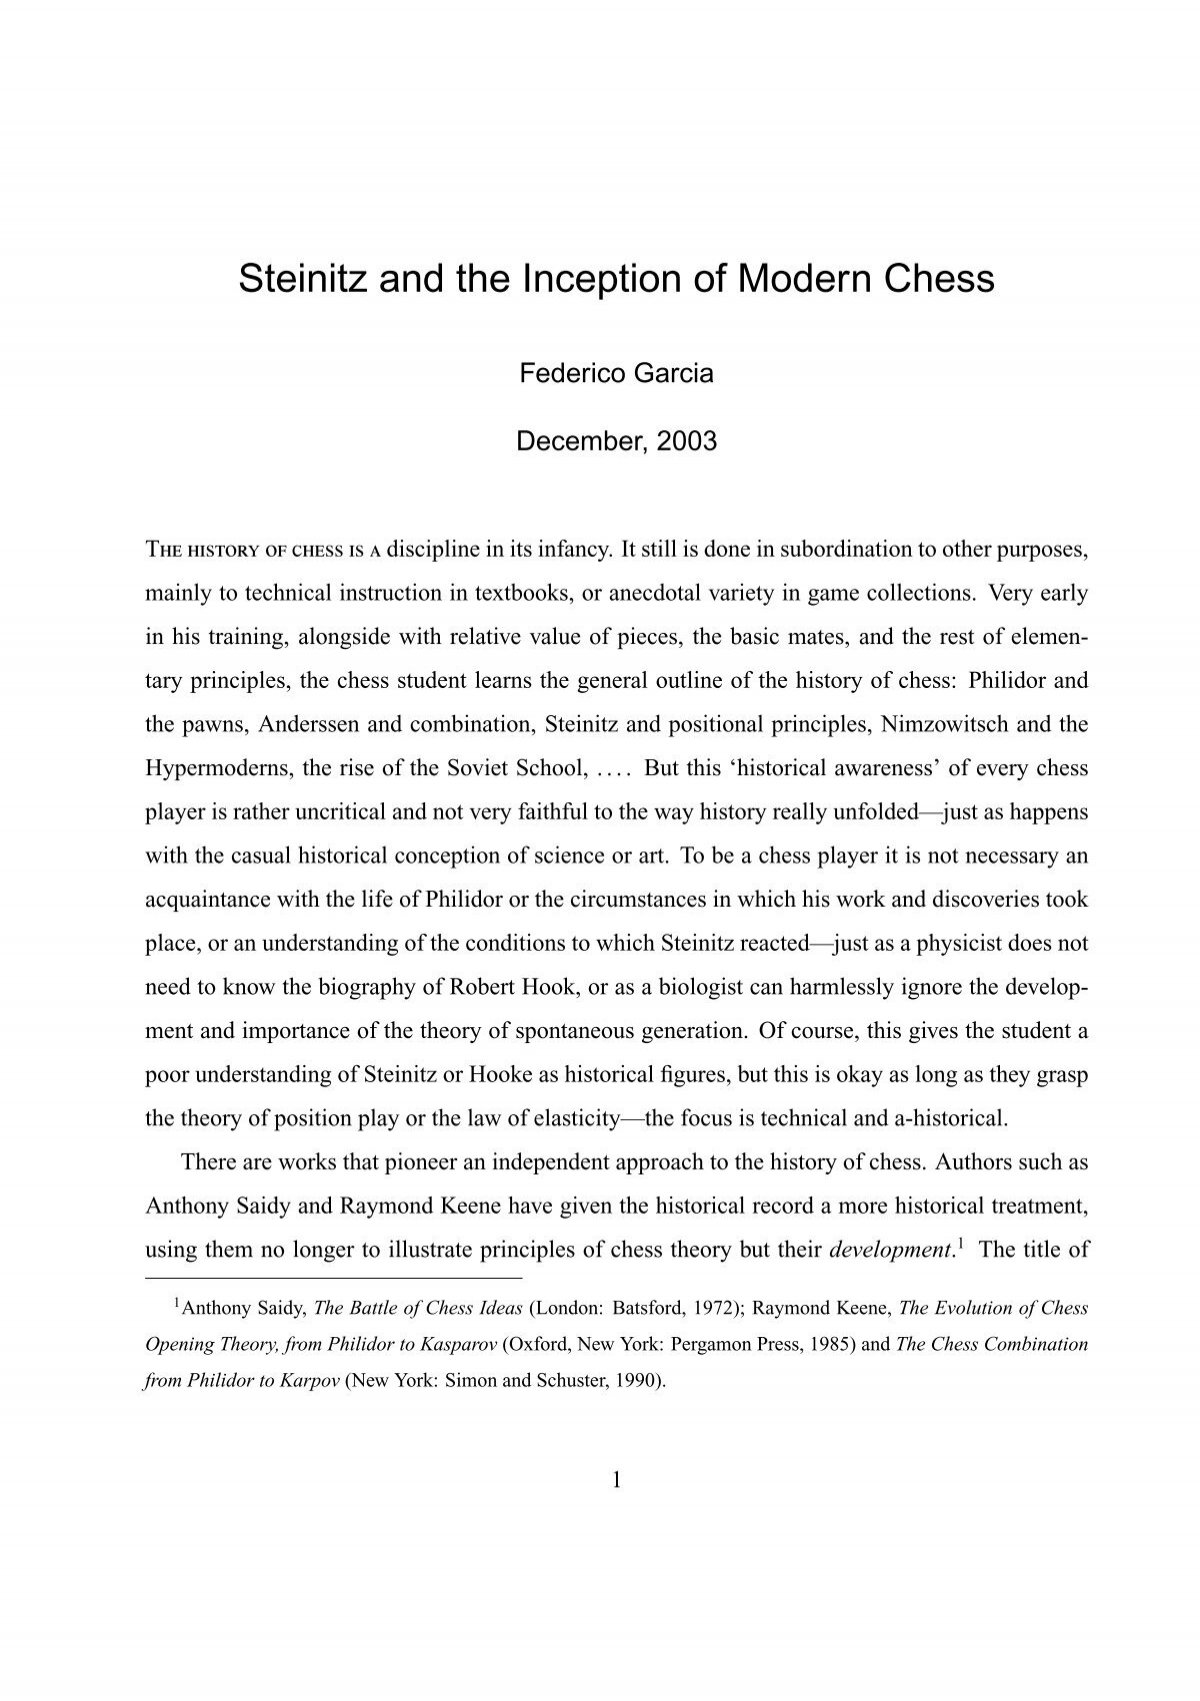 The Chess Combination from Philidor to Karpov: Keene, Raymond D